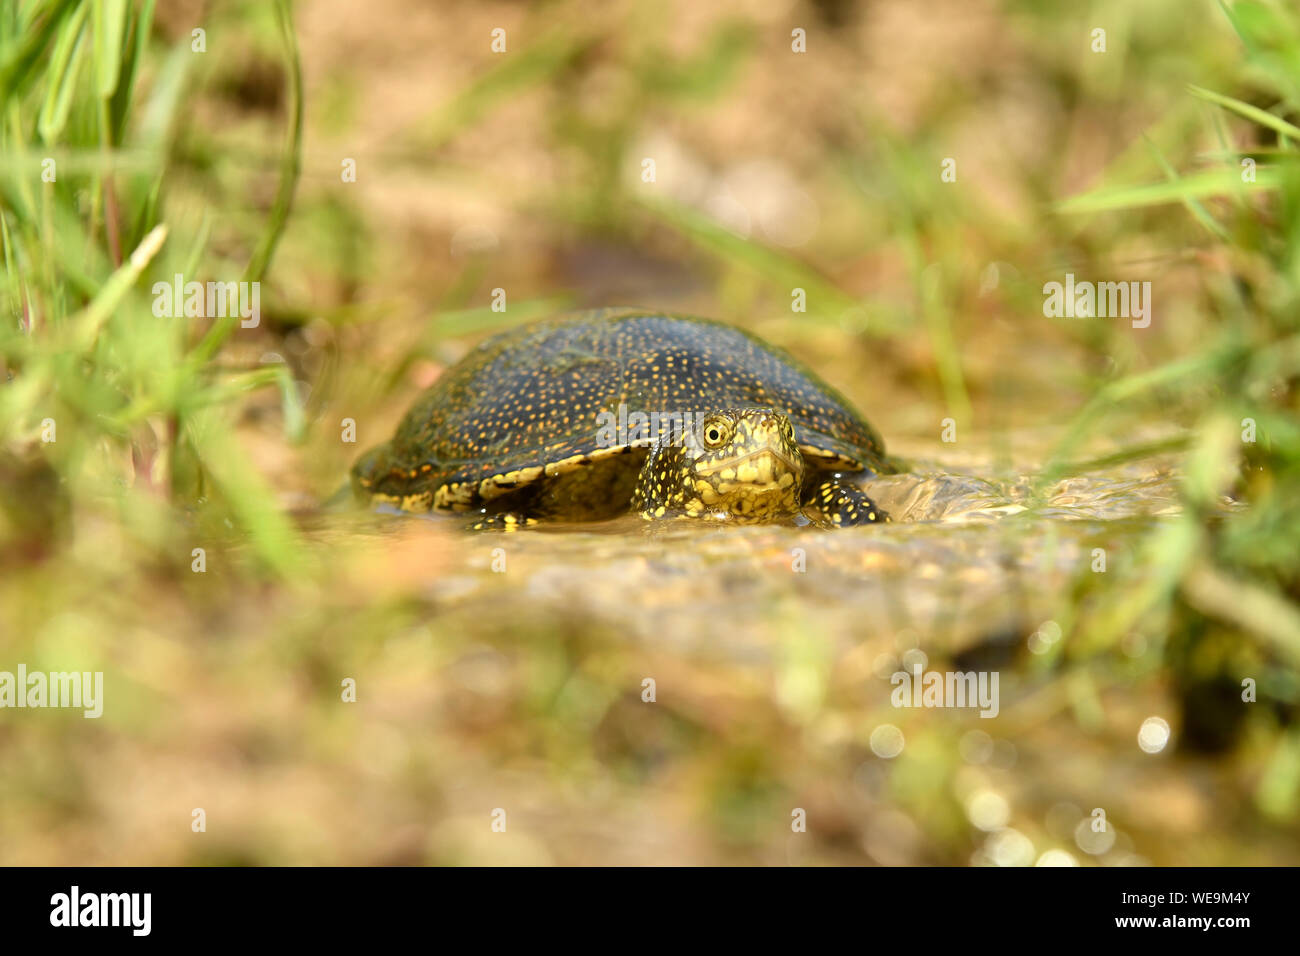 La tortue cistude (Emys orbicularis) reposant dans l'eau peu profonde, la Bulgarie, Avril Banque D'Images